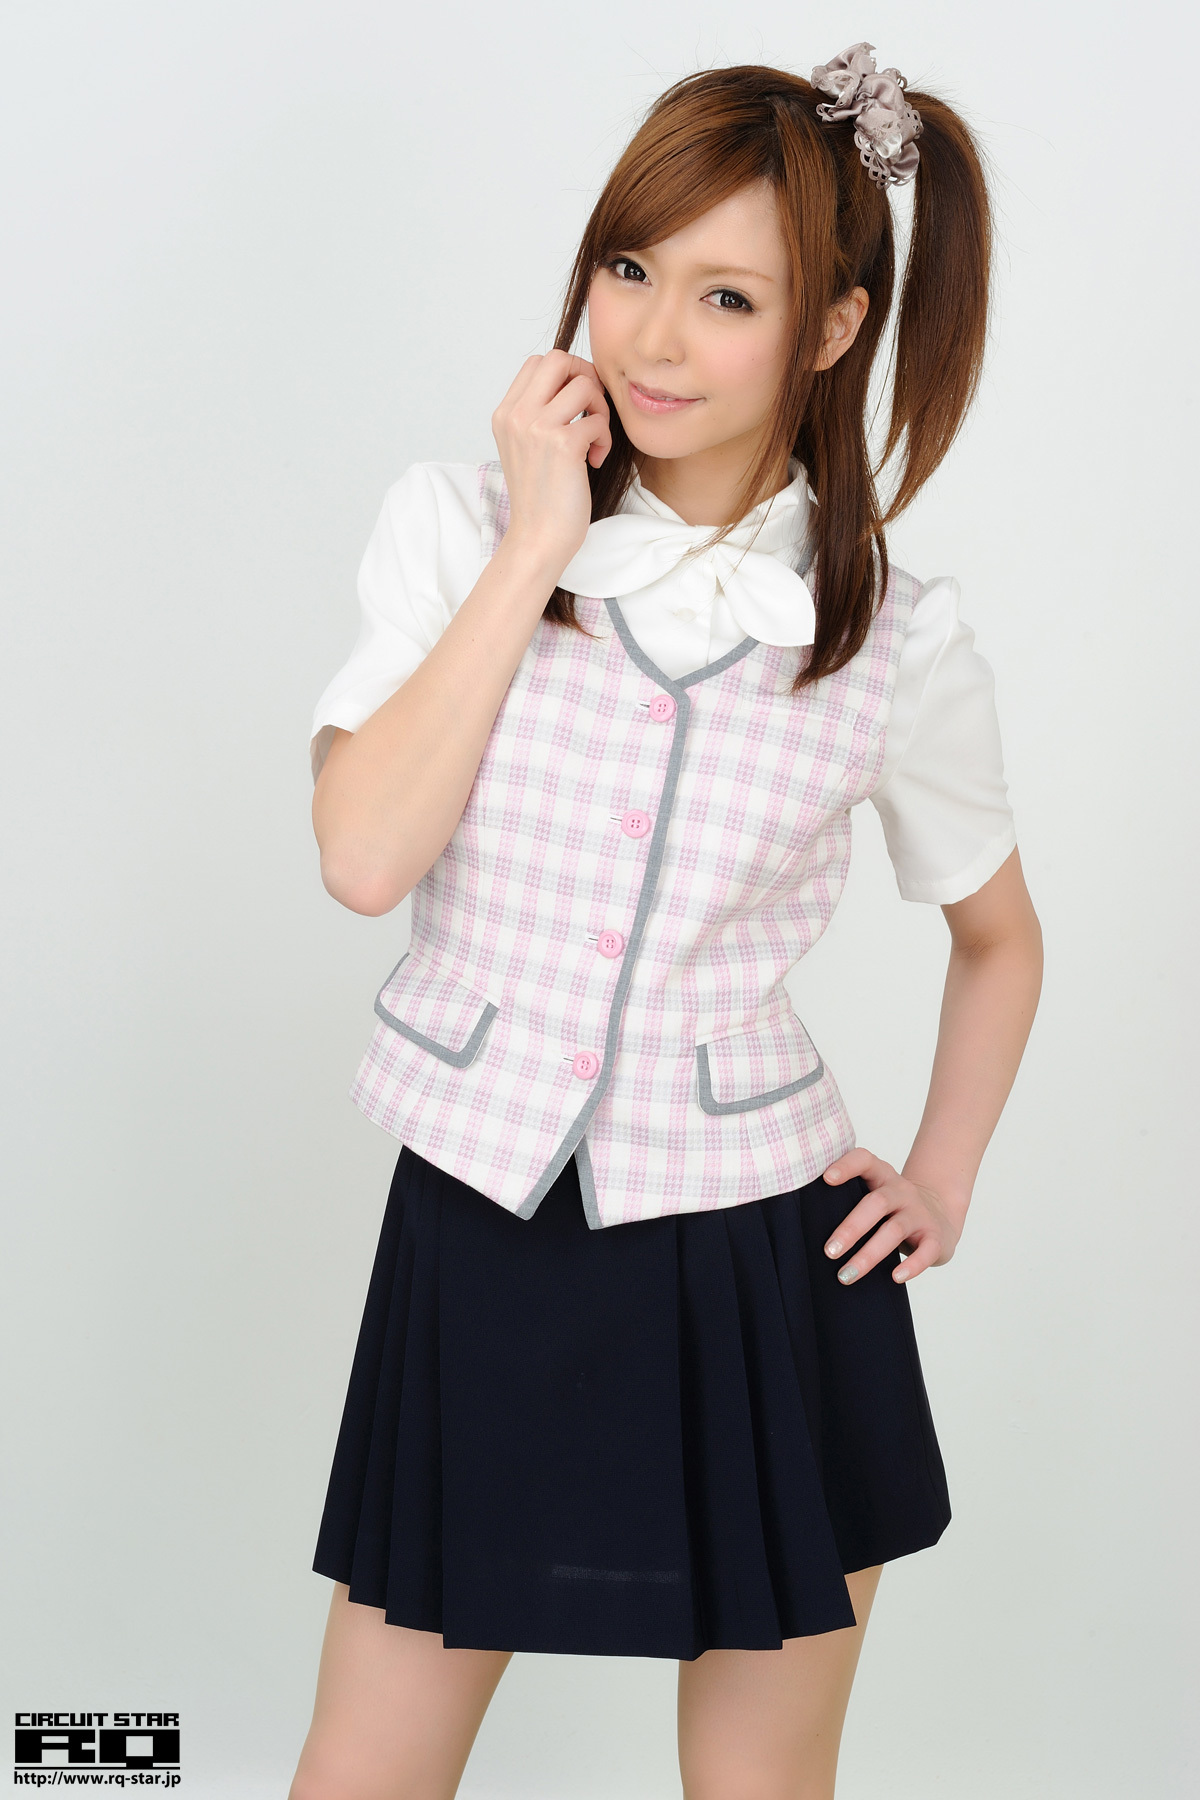 Chiba [RQ star] 2012.05.03 no.00631 Japanese sexy beauty uniform